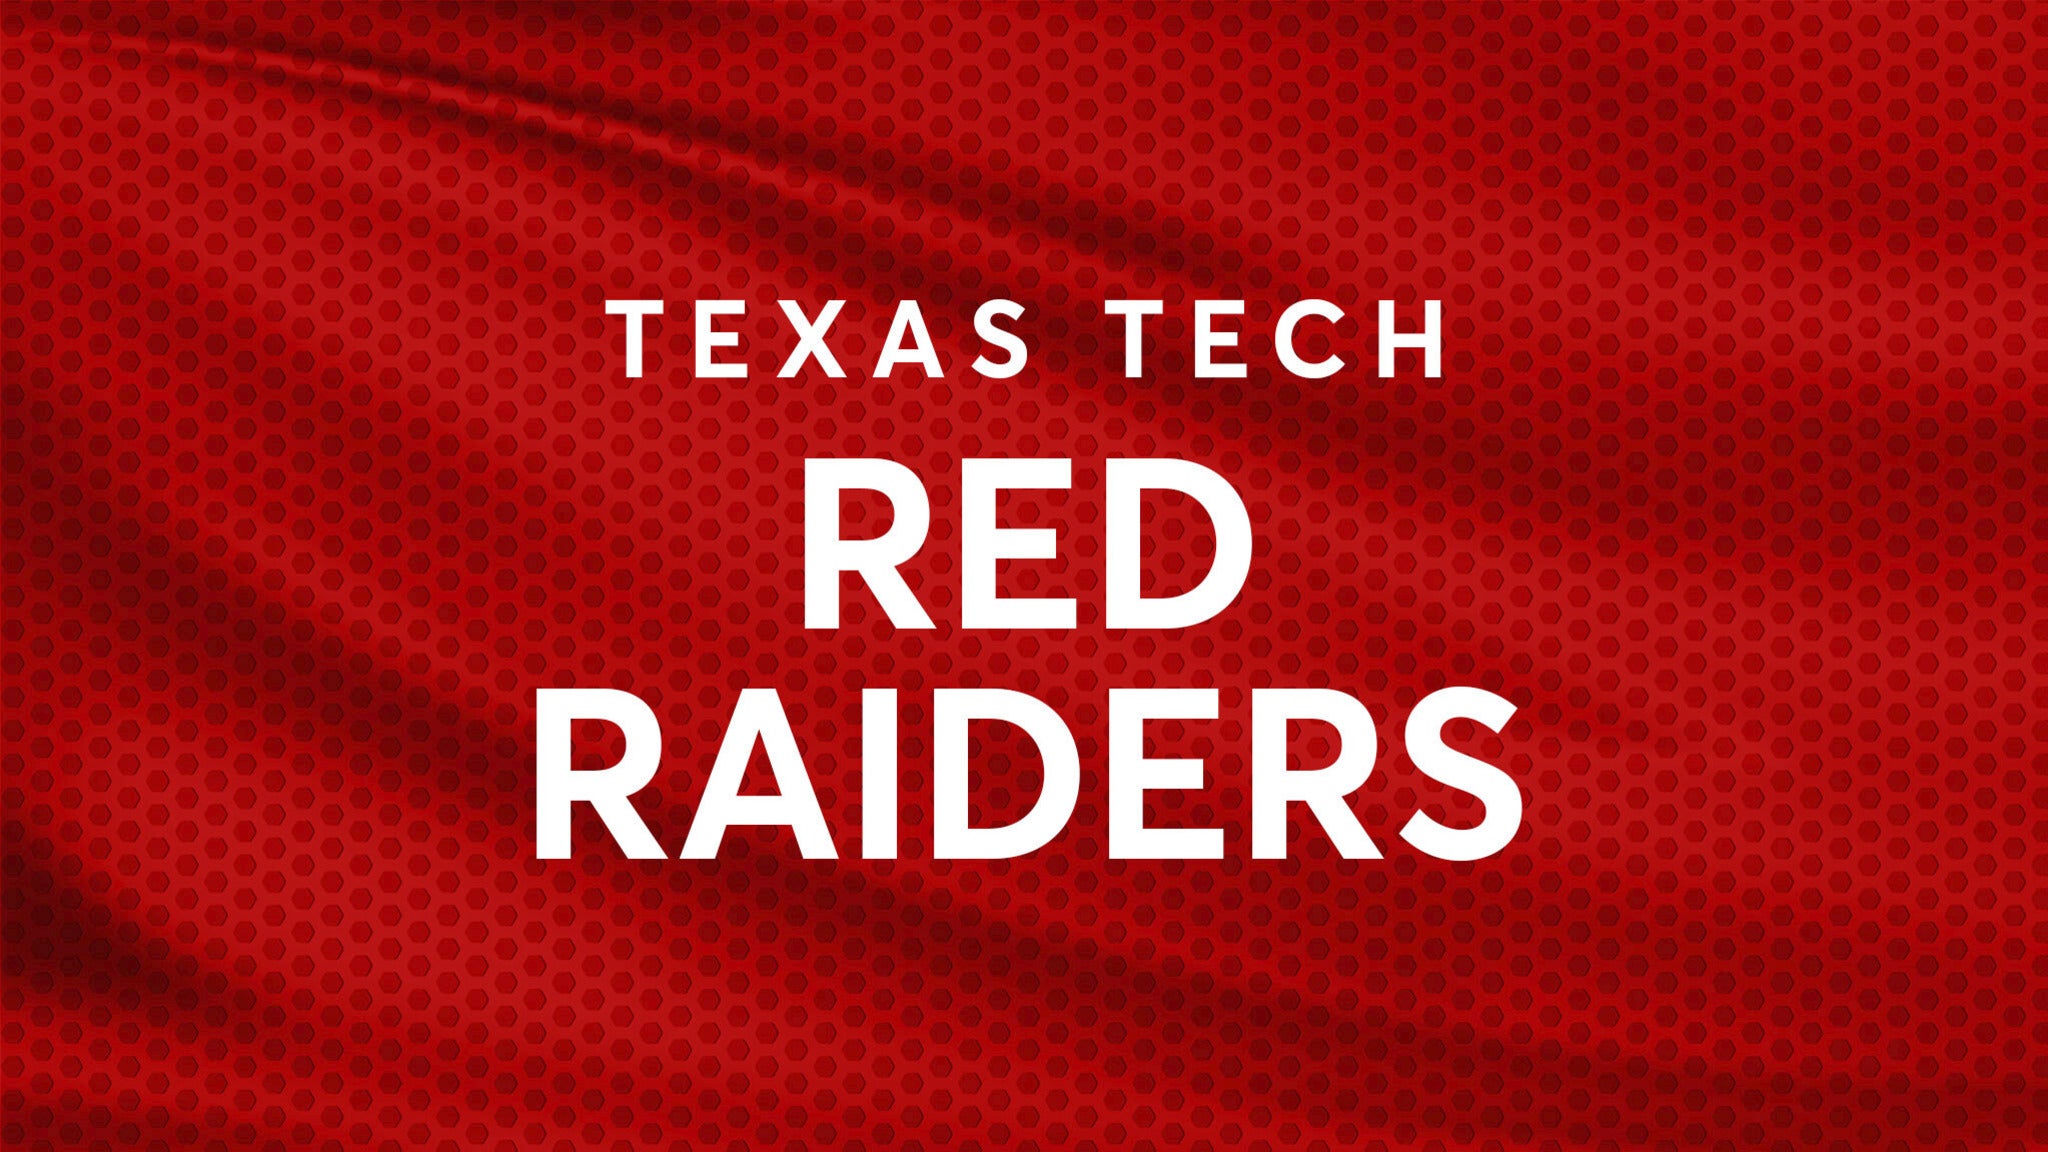 Texas Tech Red Raiders Softball presale information on freepresalepasswords.com